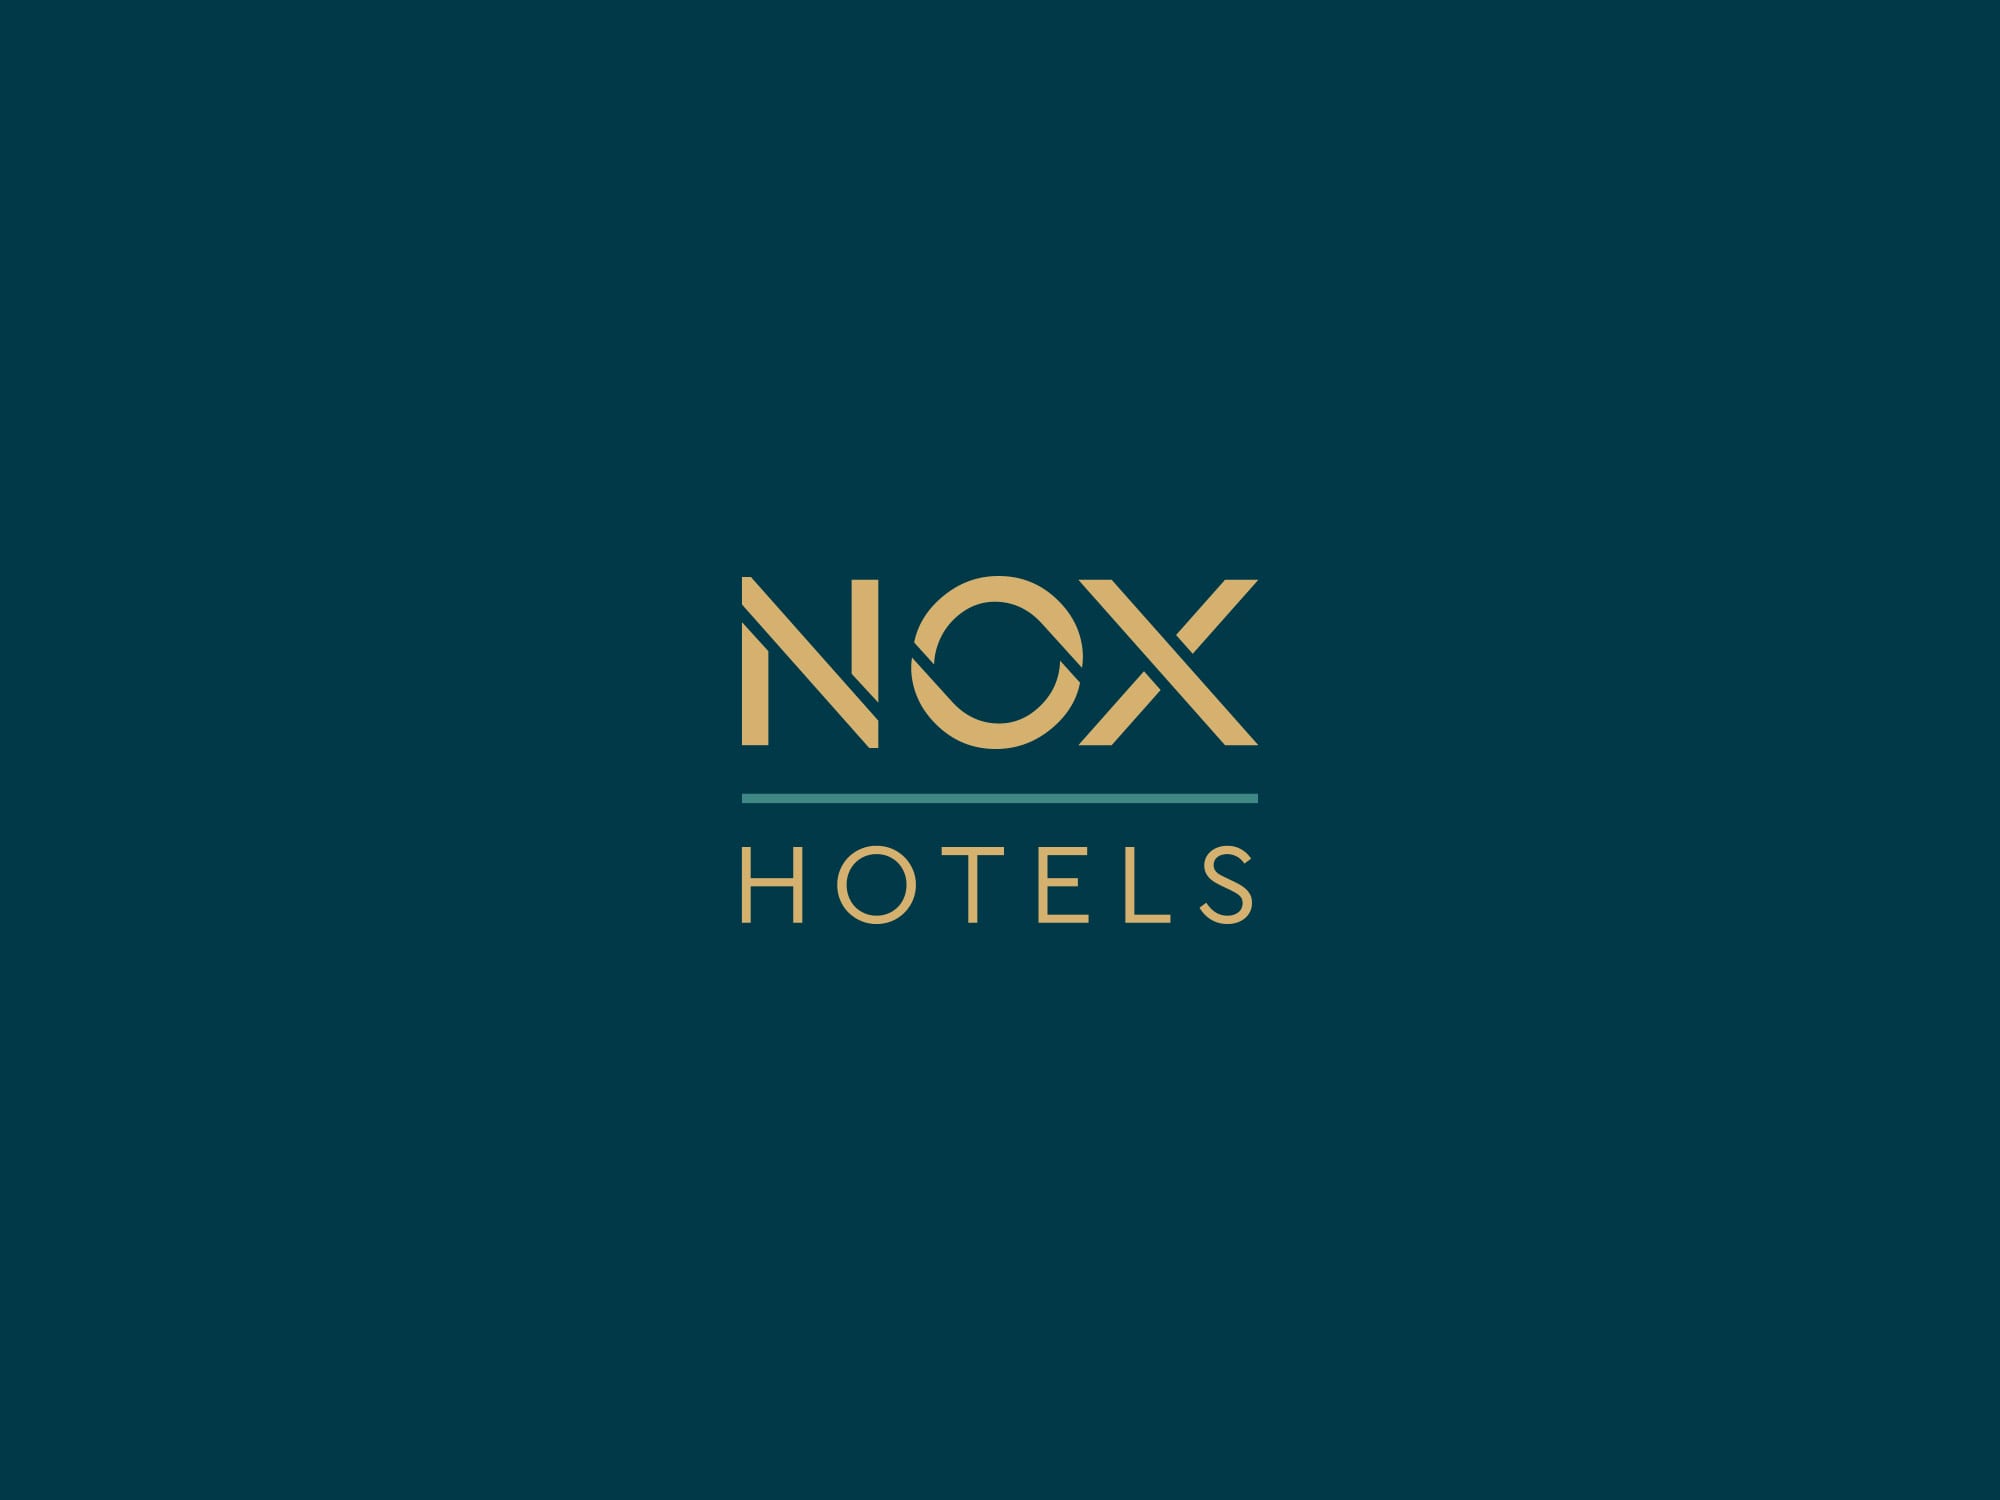 NOX Hotels - boutique hotel chain